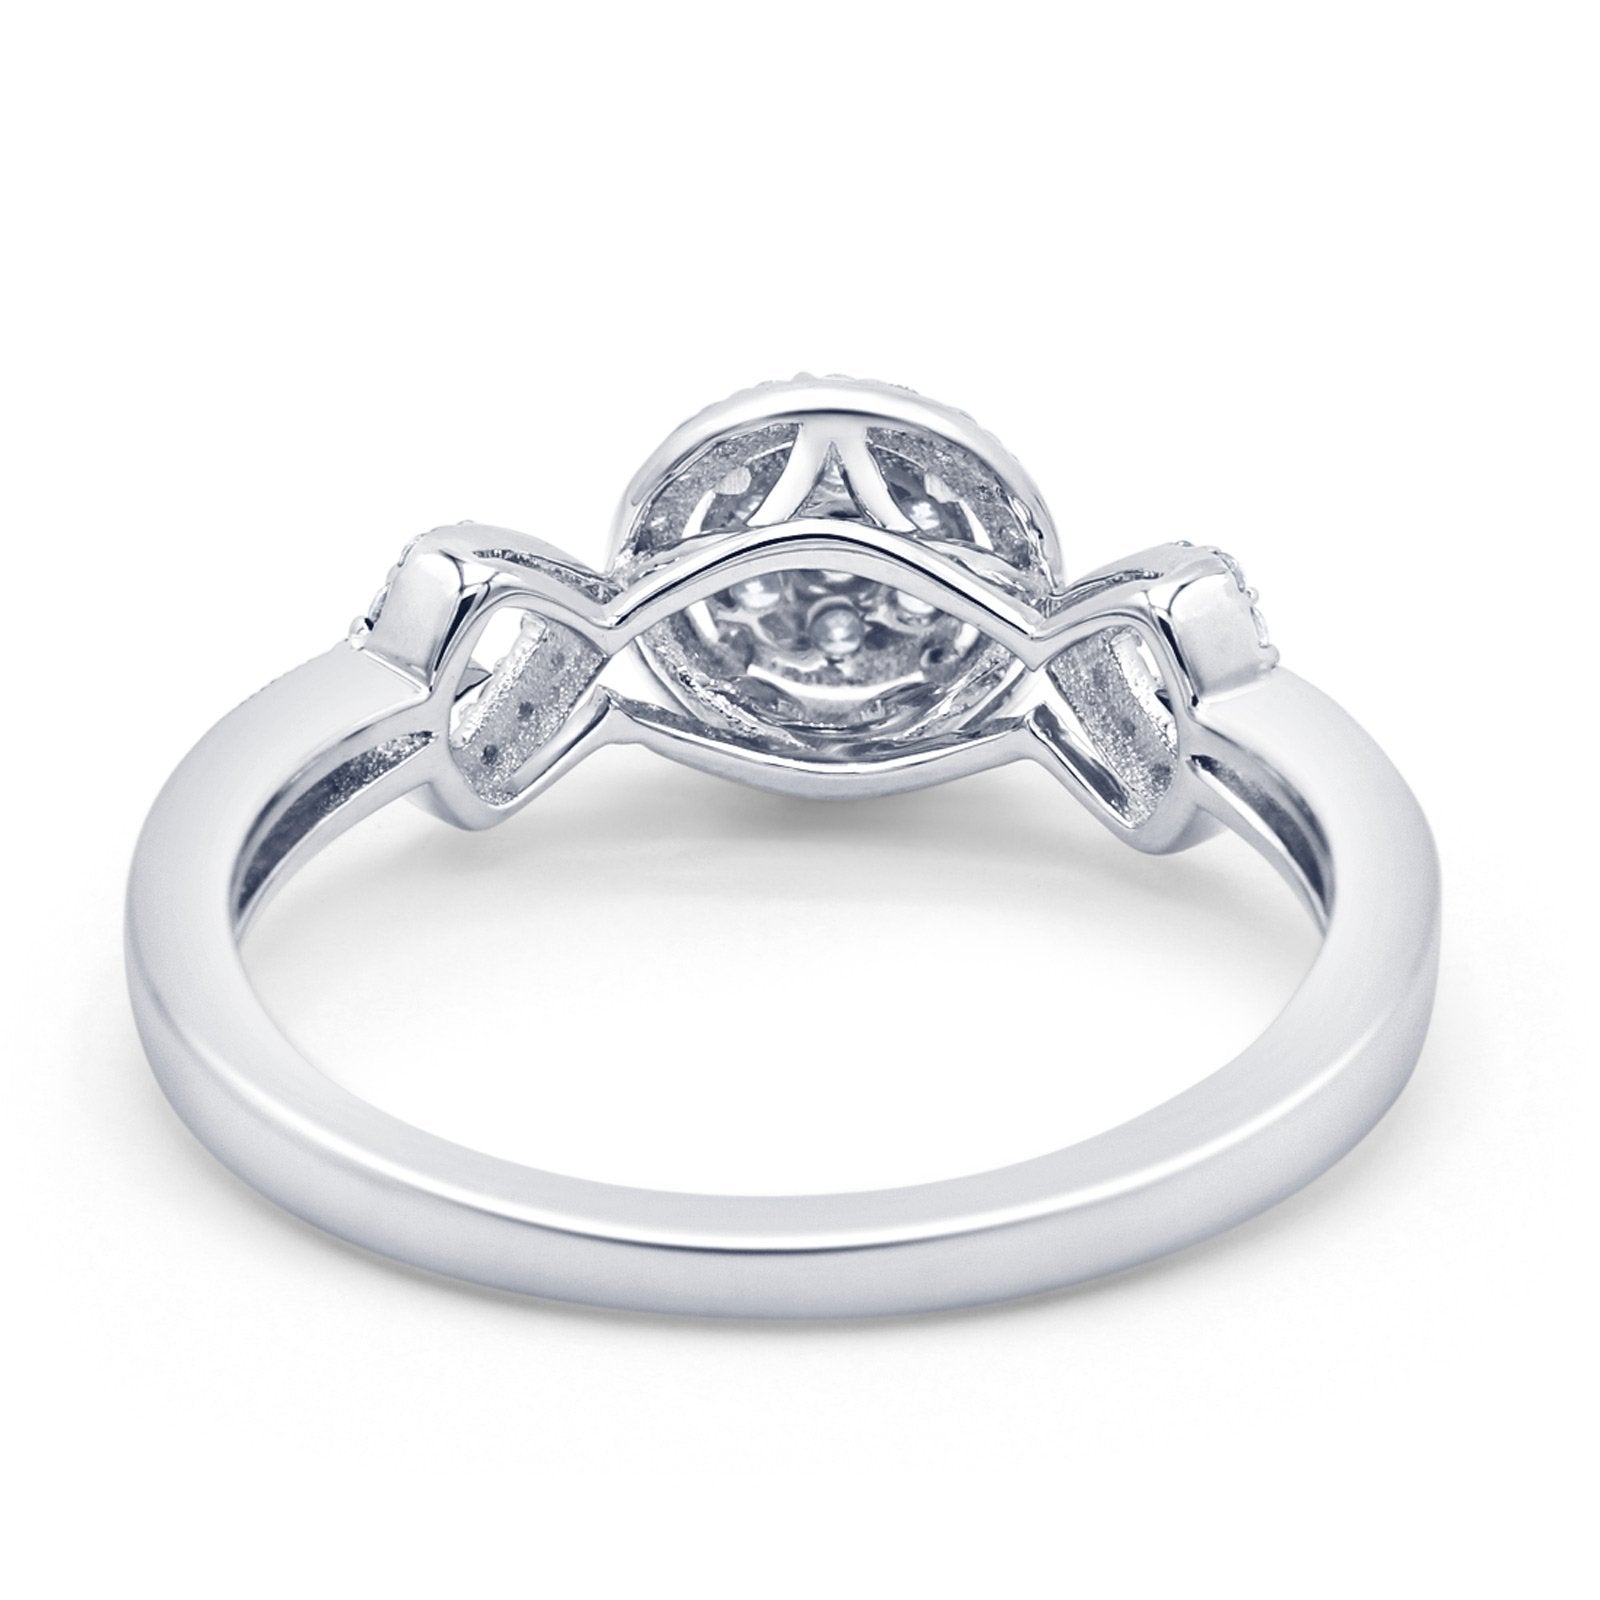 14K Gold 0.25ct Round 7mm G SI Diamond Promise Engagement Wedding Ring